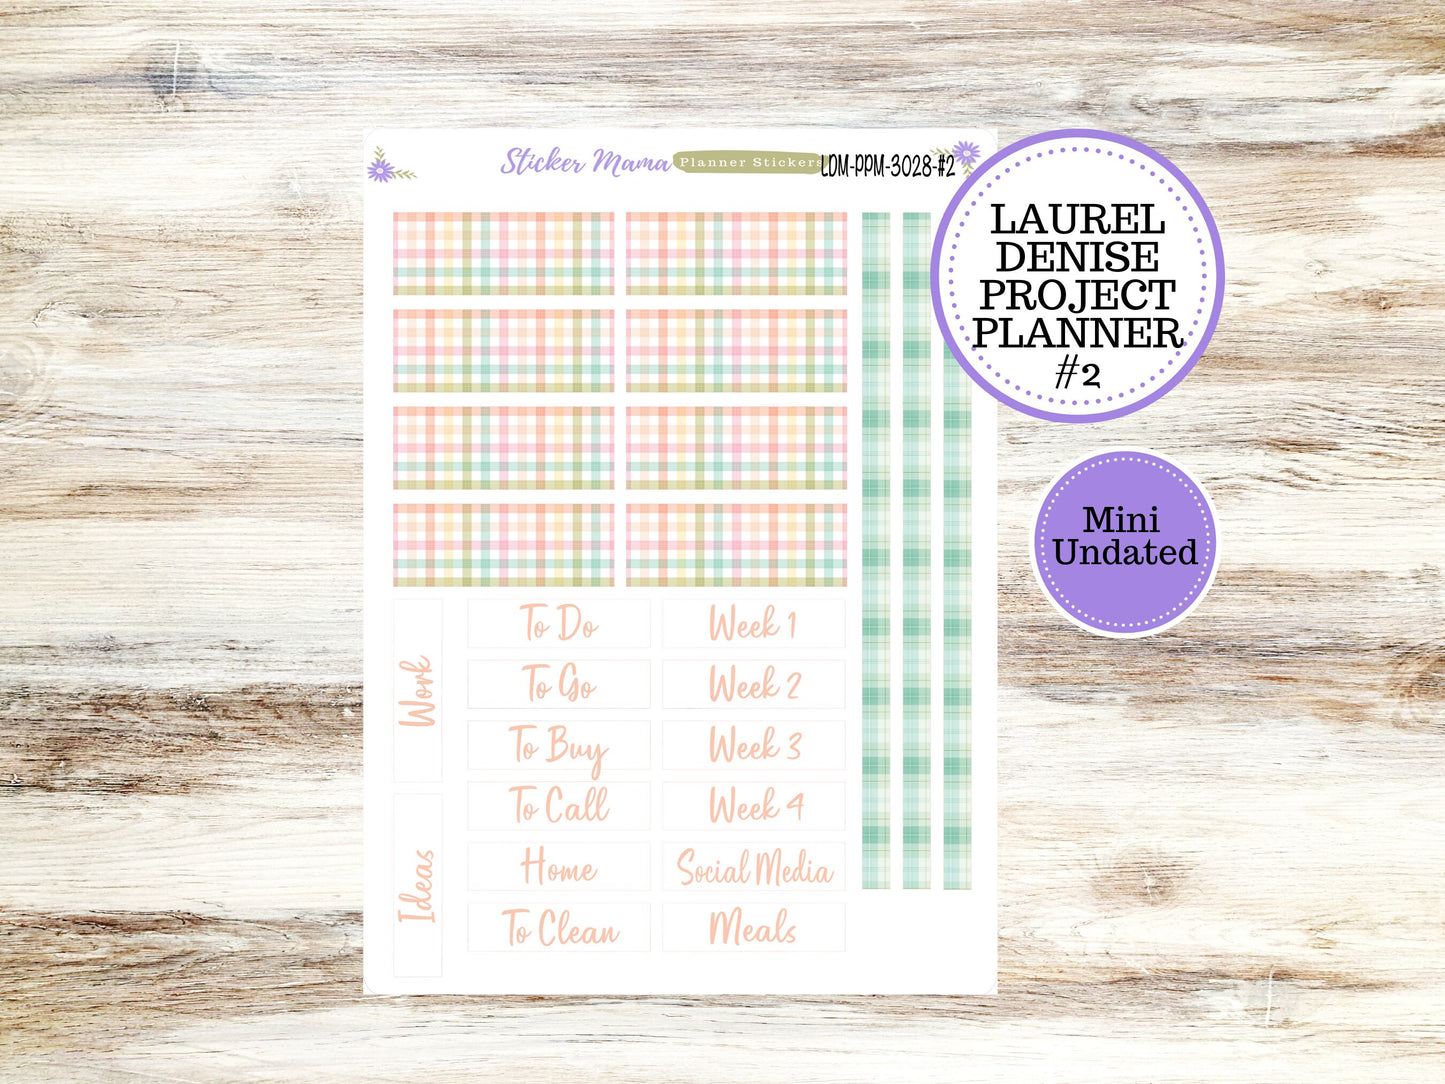 LAUREL DENISE PROJECT August Planner Kit #3113 || Hot Air Balloons || Laurel Denise Kit || Laurel Denise Stickers ||  || August ld